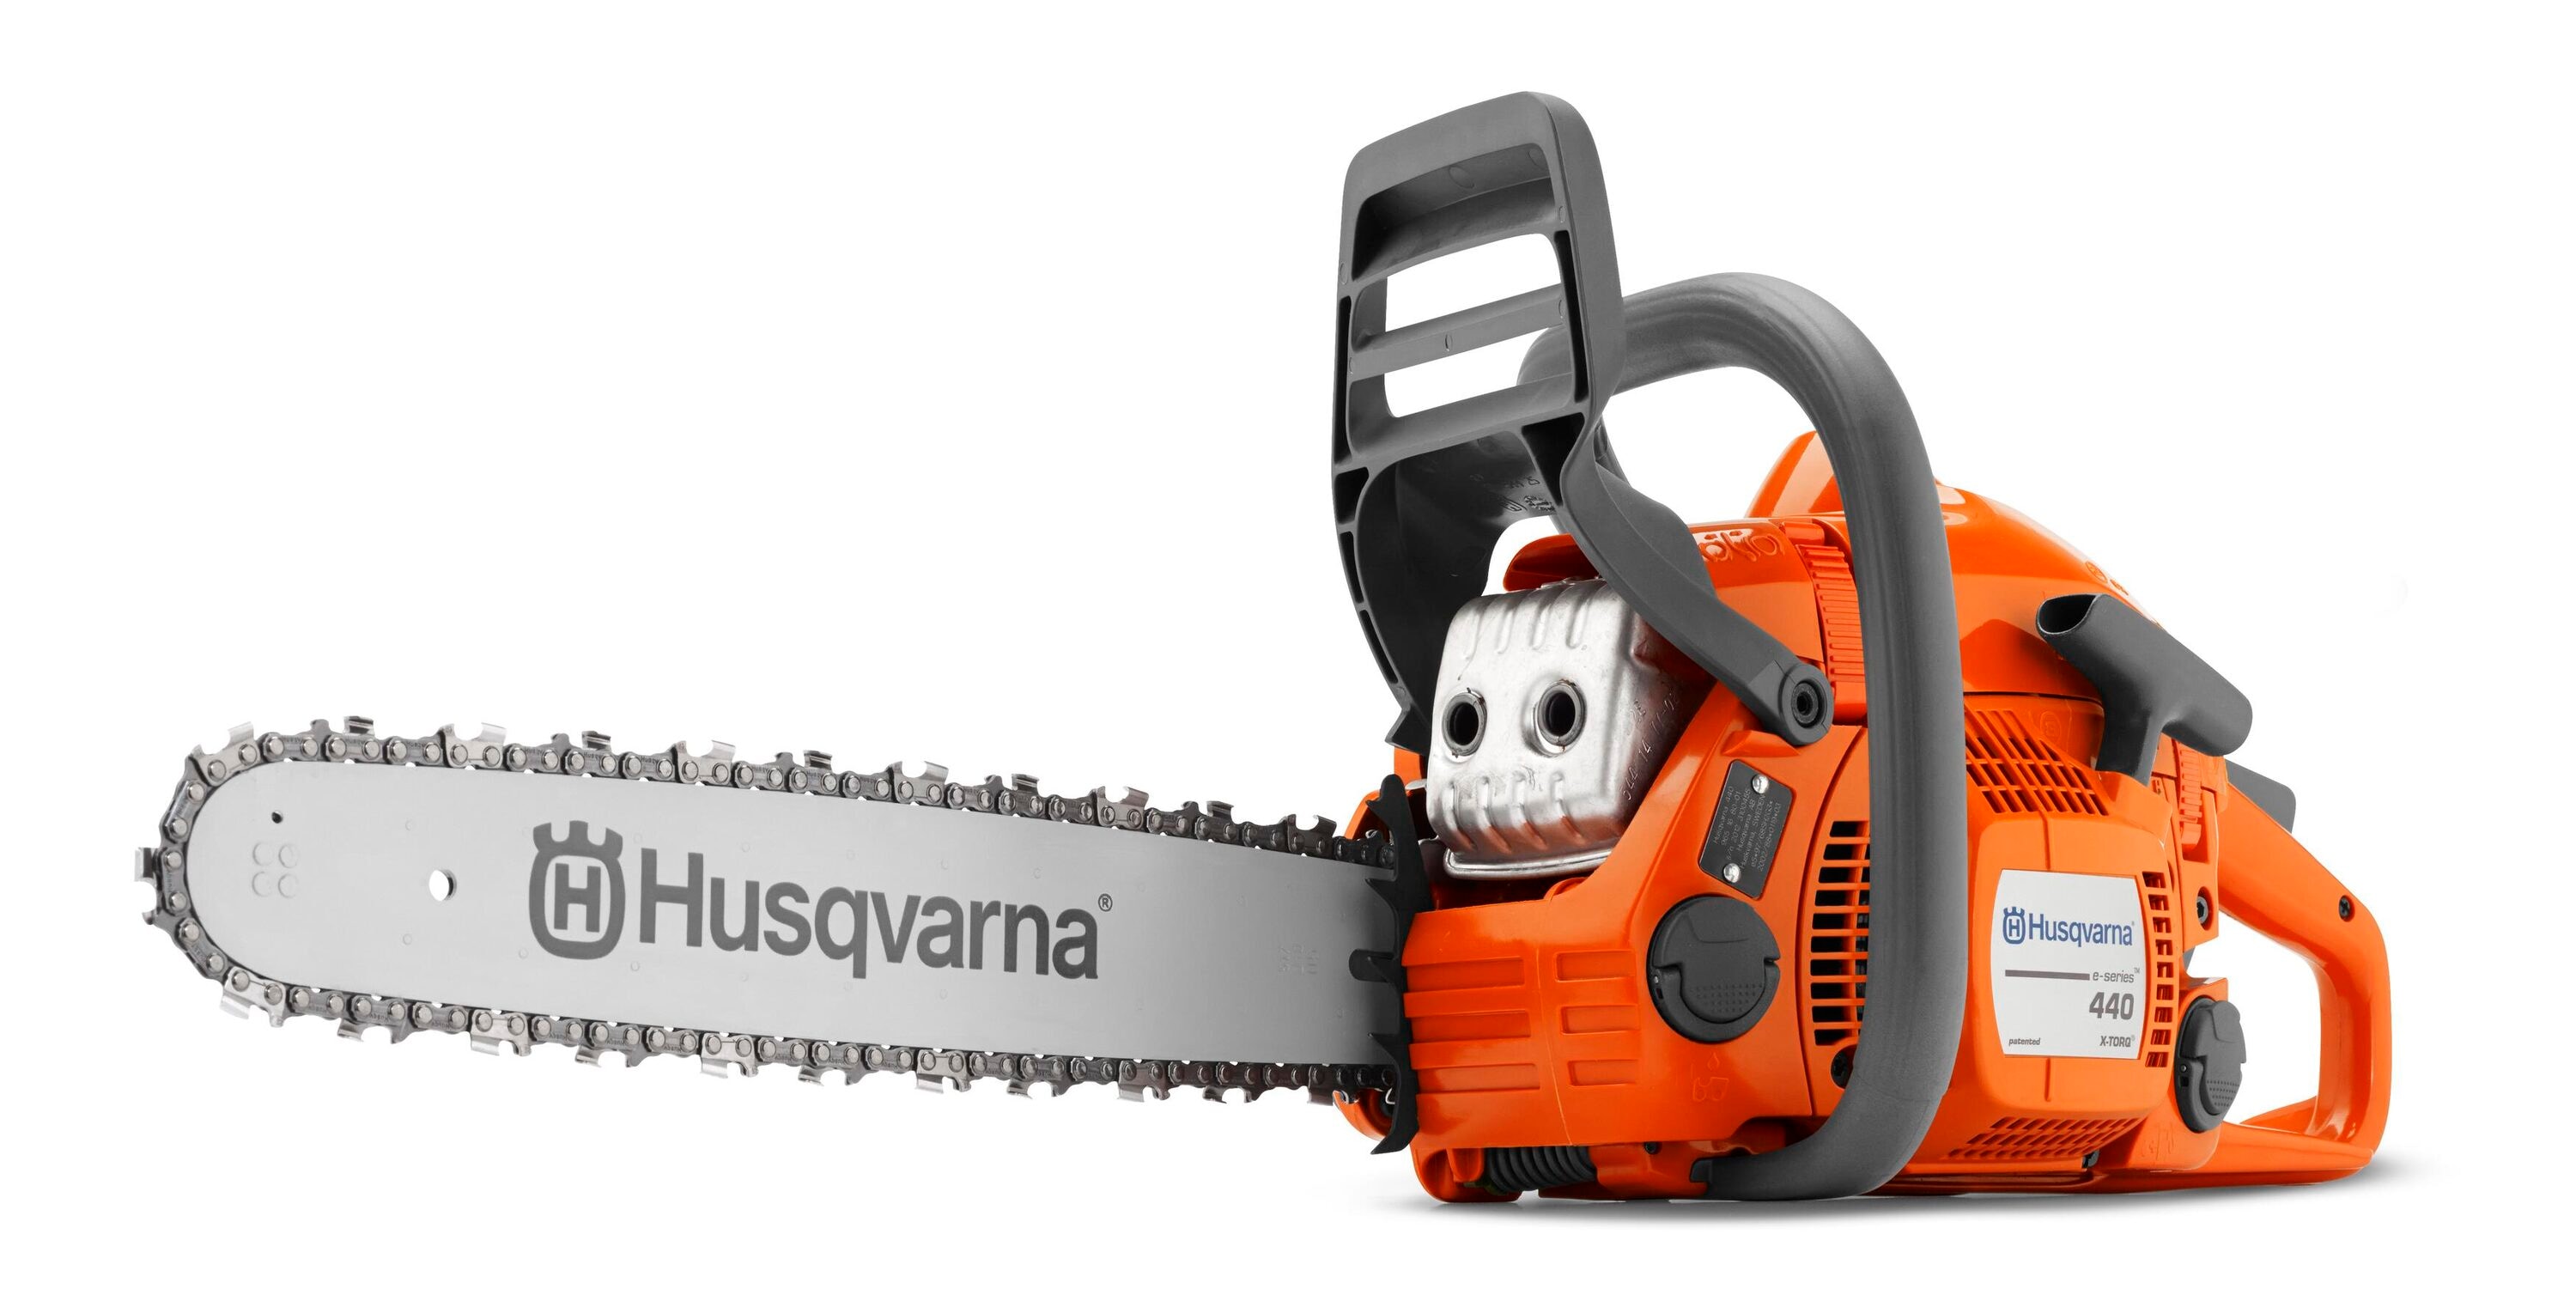 Image of Husqvarna 440 II chainsaw on Best Buy website